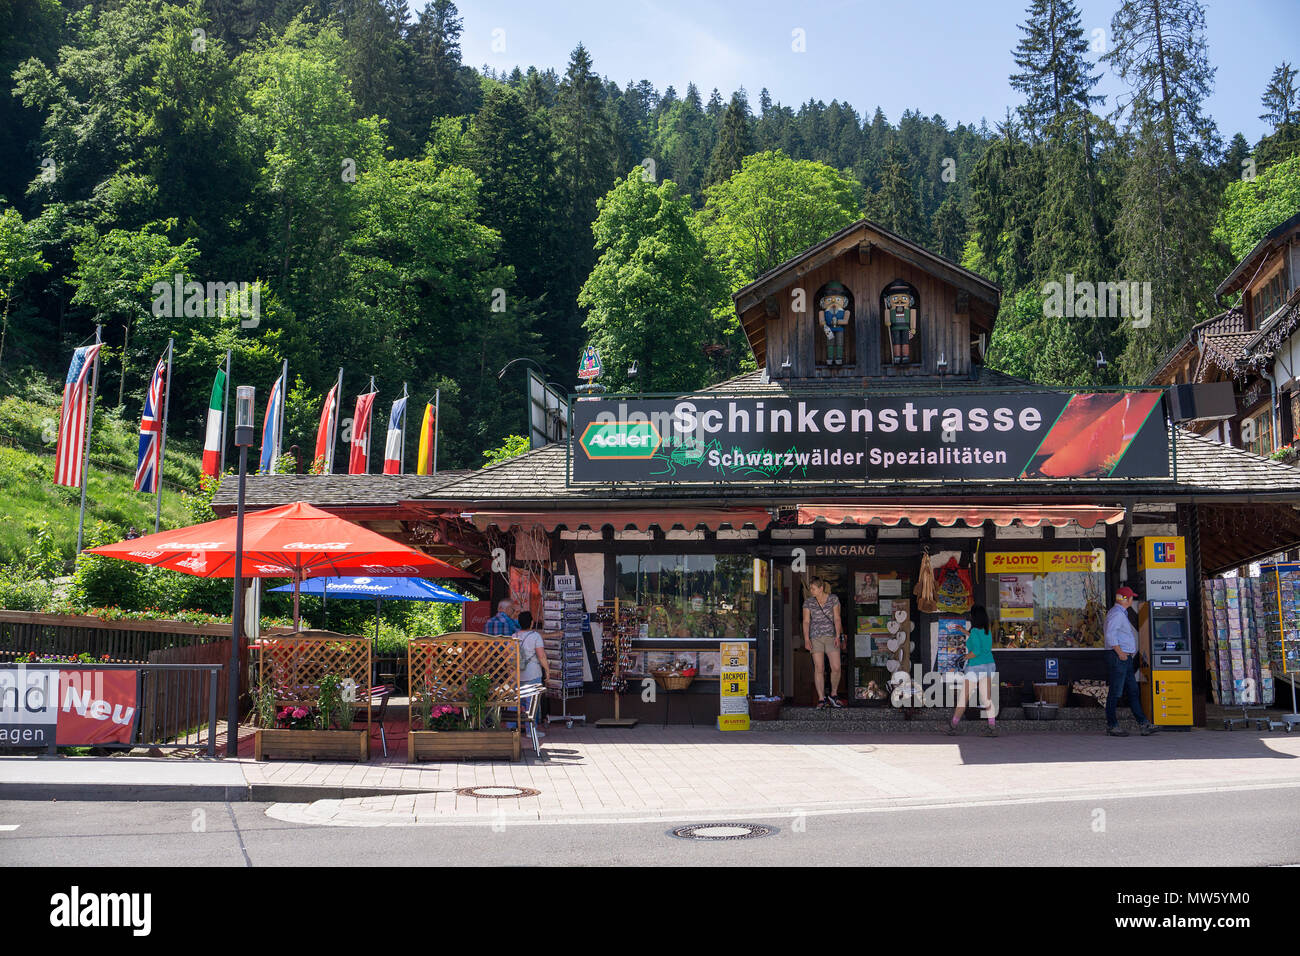 Schinkenstrasse, magasins de souvenirs au centre de Triberg, Forêt Noire, Bade-Wurtemberg, Allemagne, Europe Banque D'Images